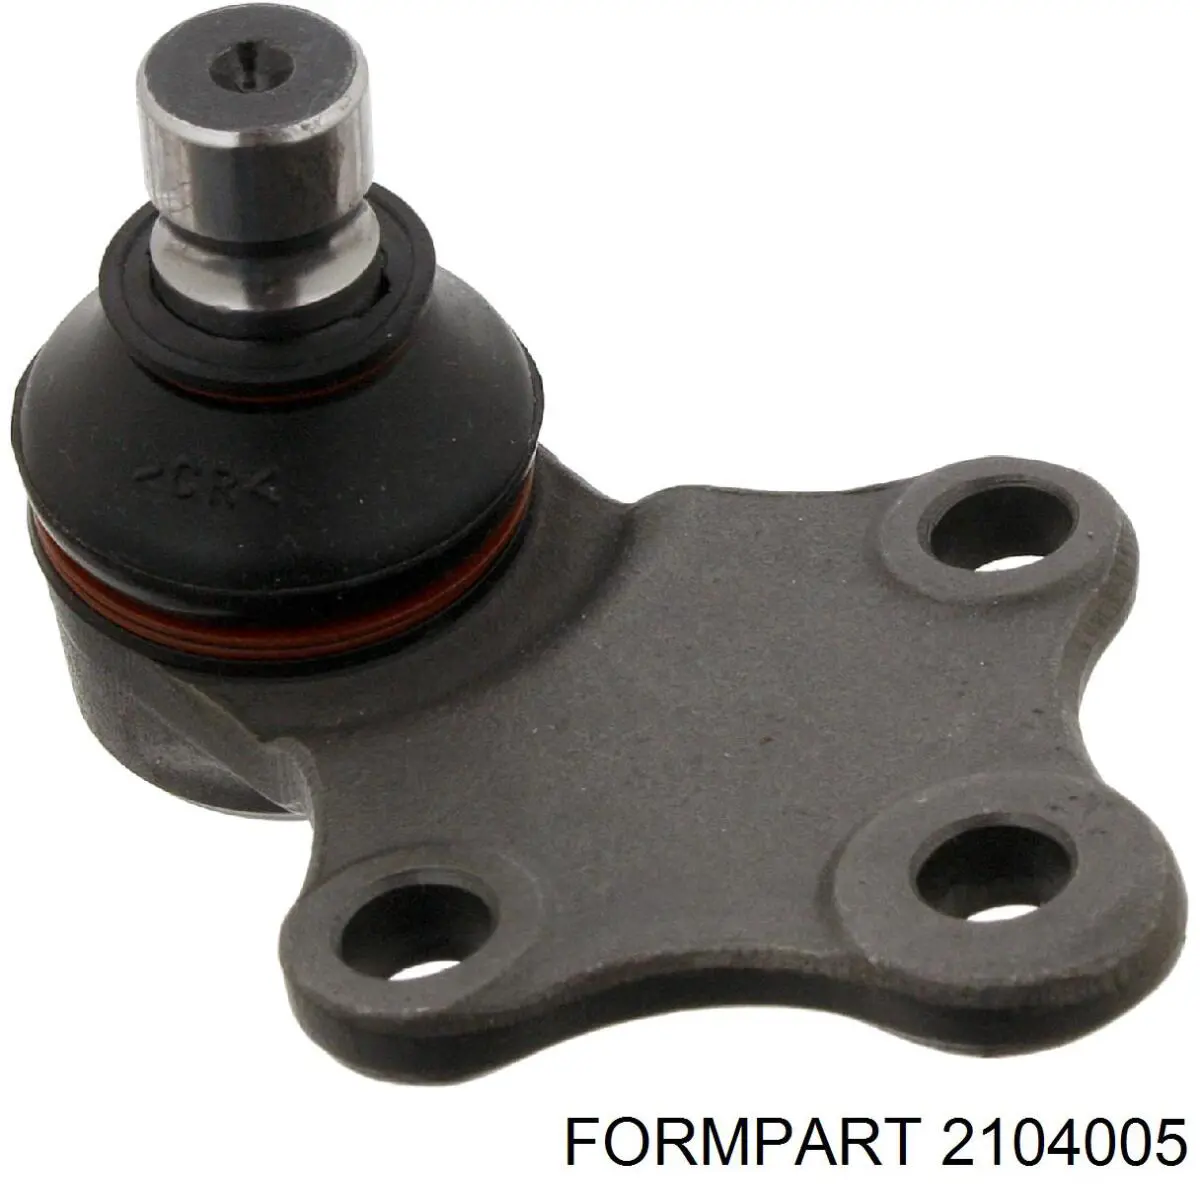 2104005 Formpart/Otoform шаровая опора нижняя